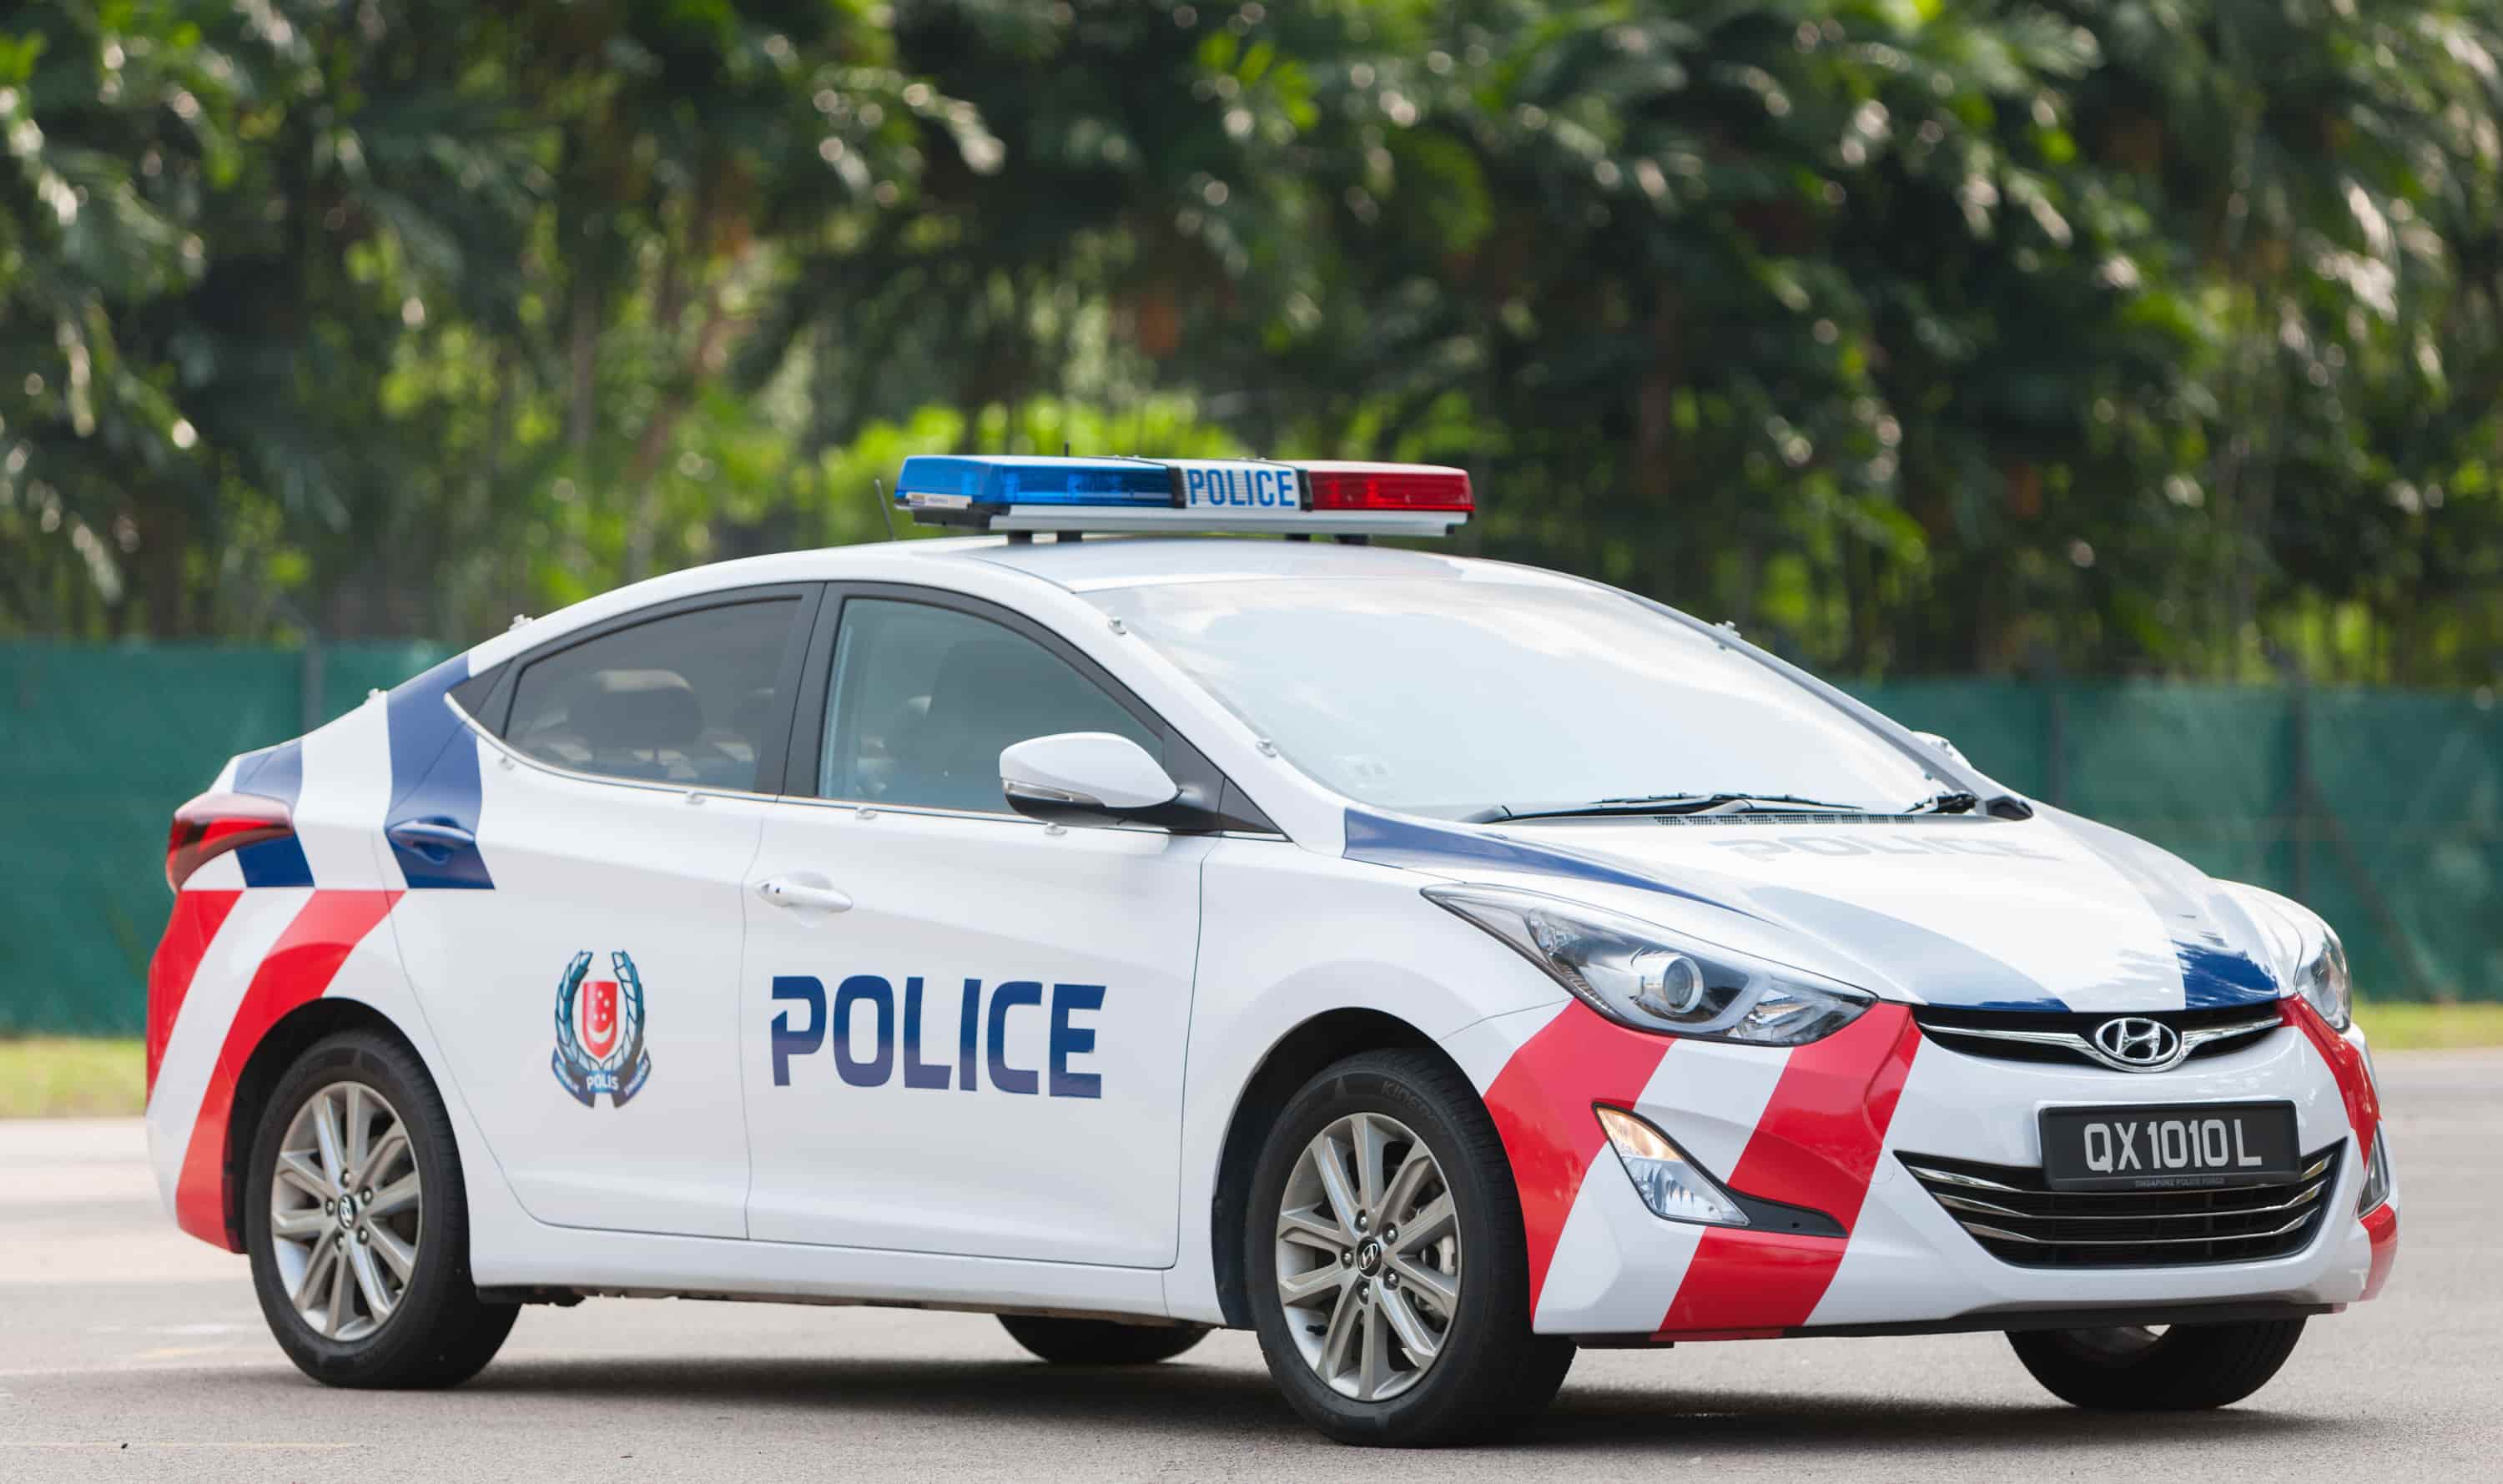 Police Patrol Car 2020